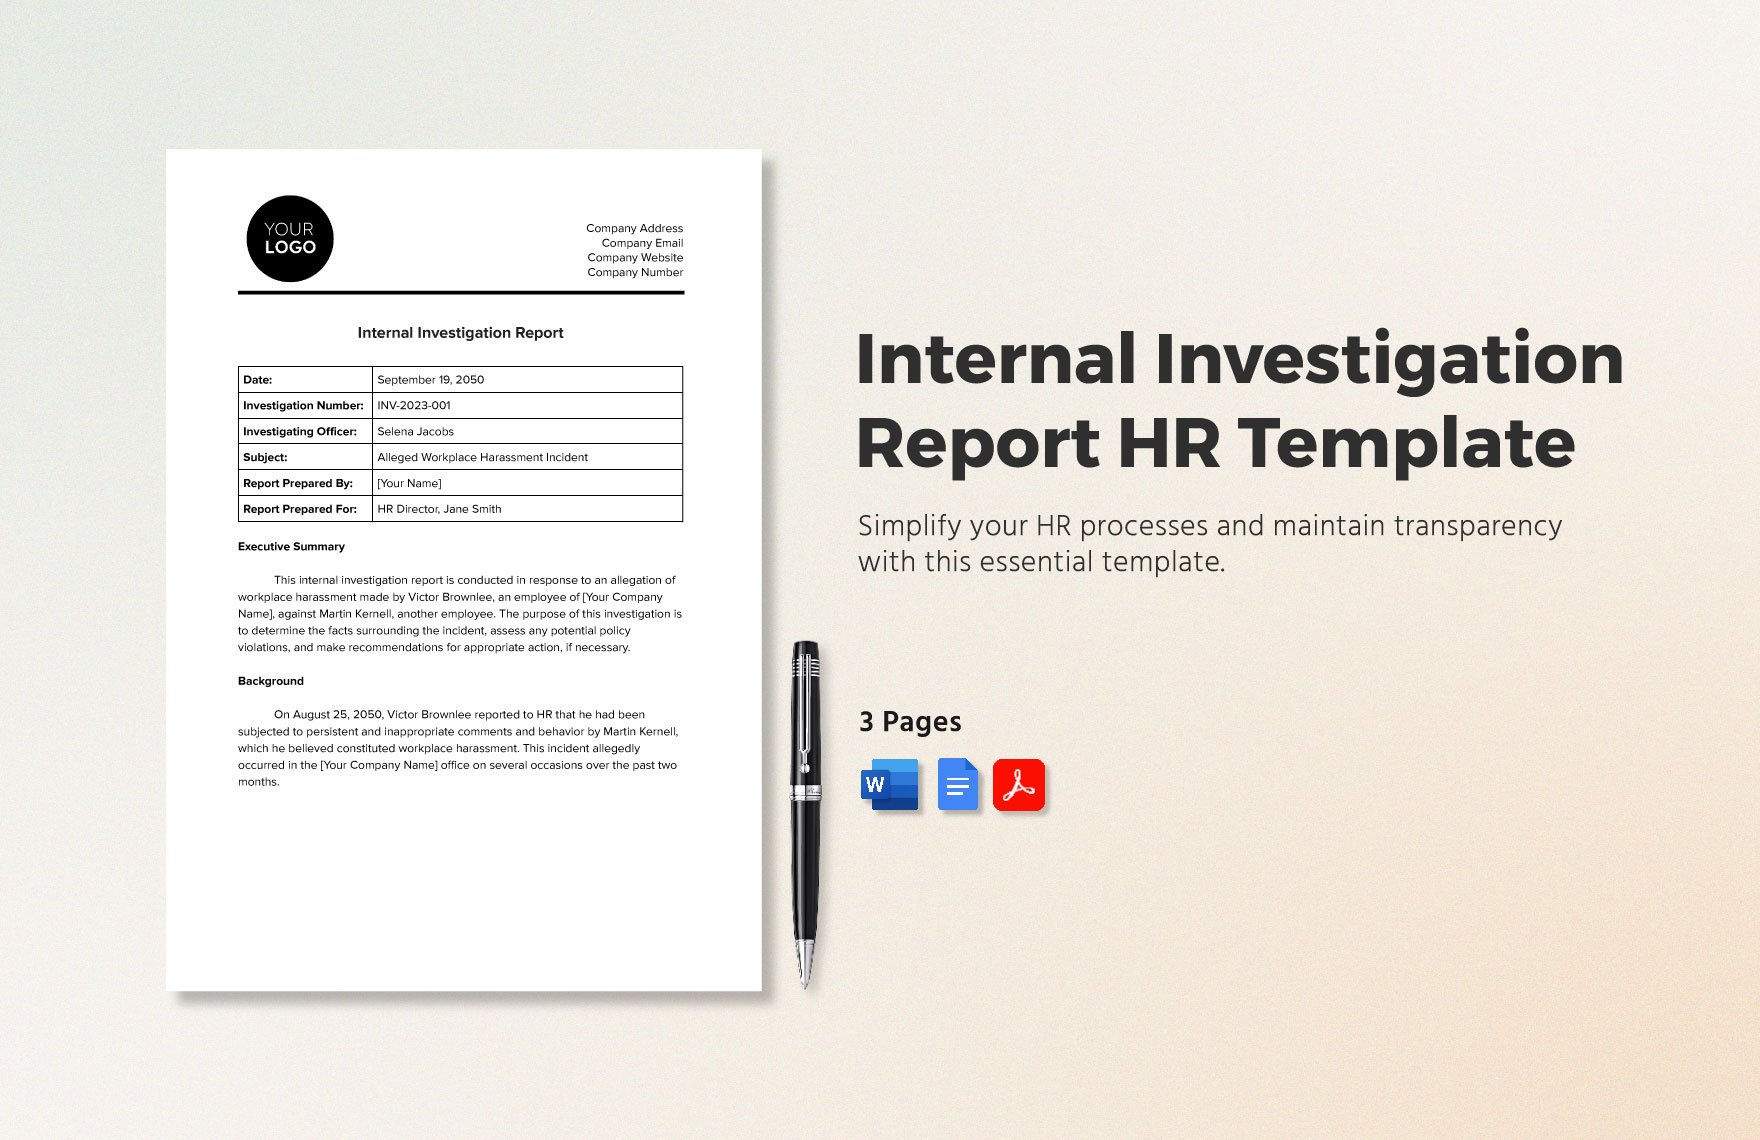 Internal Investigation Report HR Template